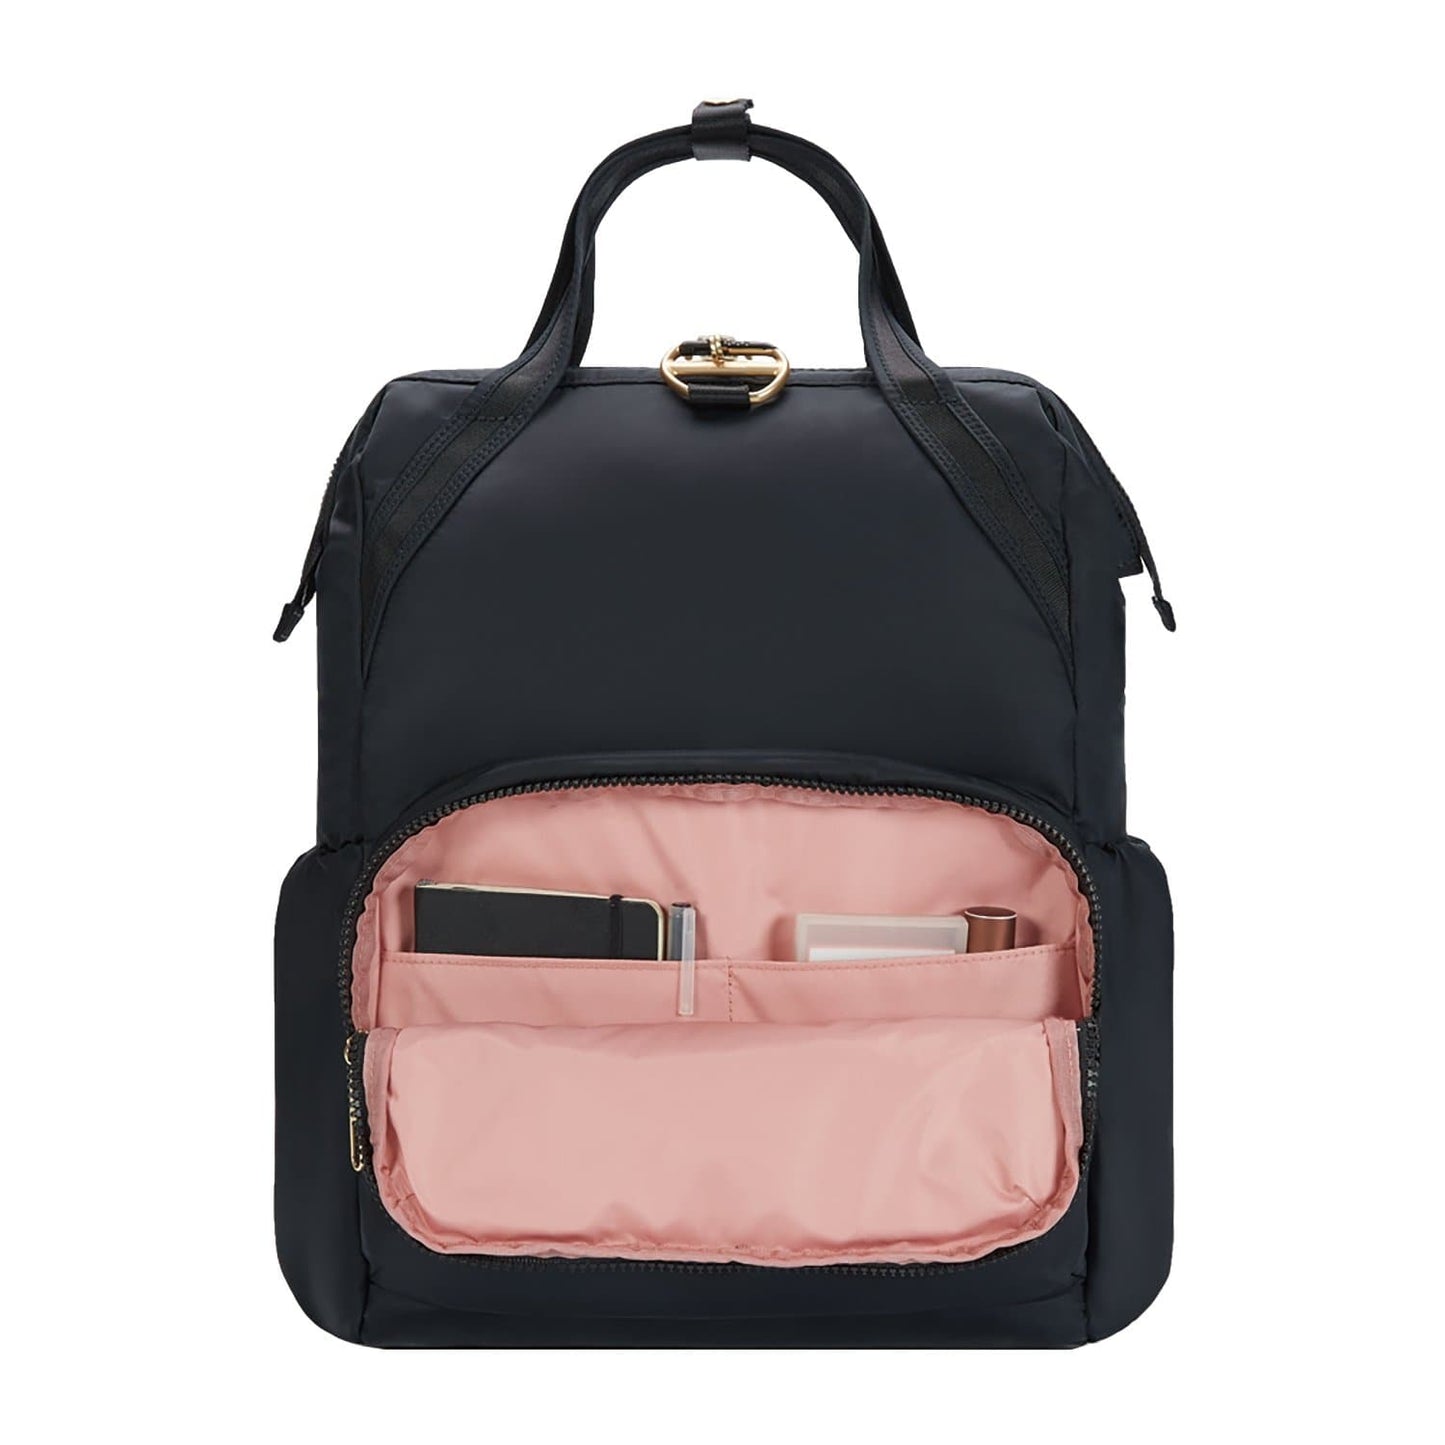 Pacsafe Citysafe CX Backpack - Black